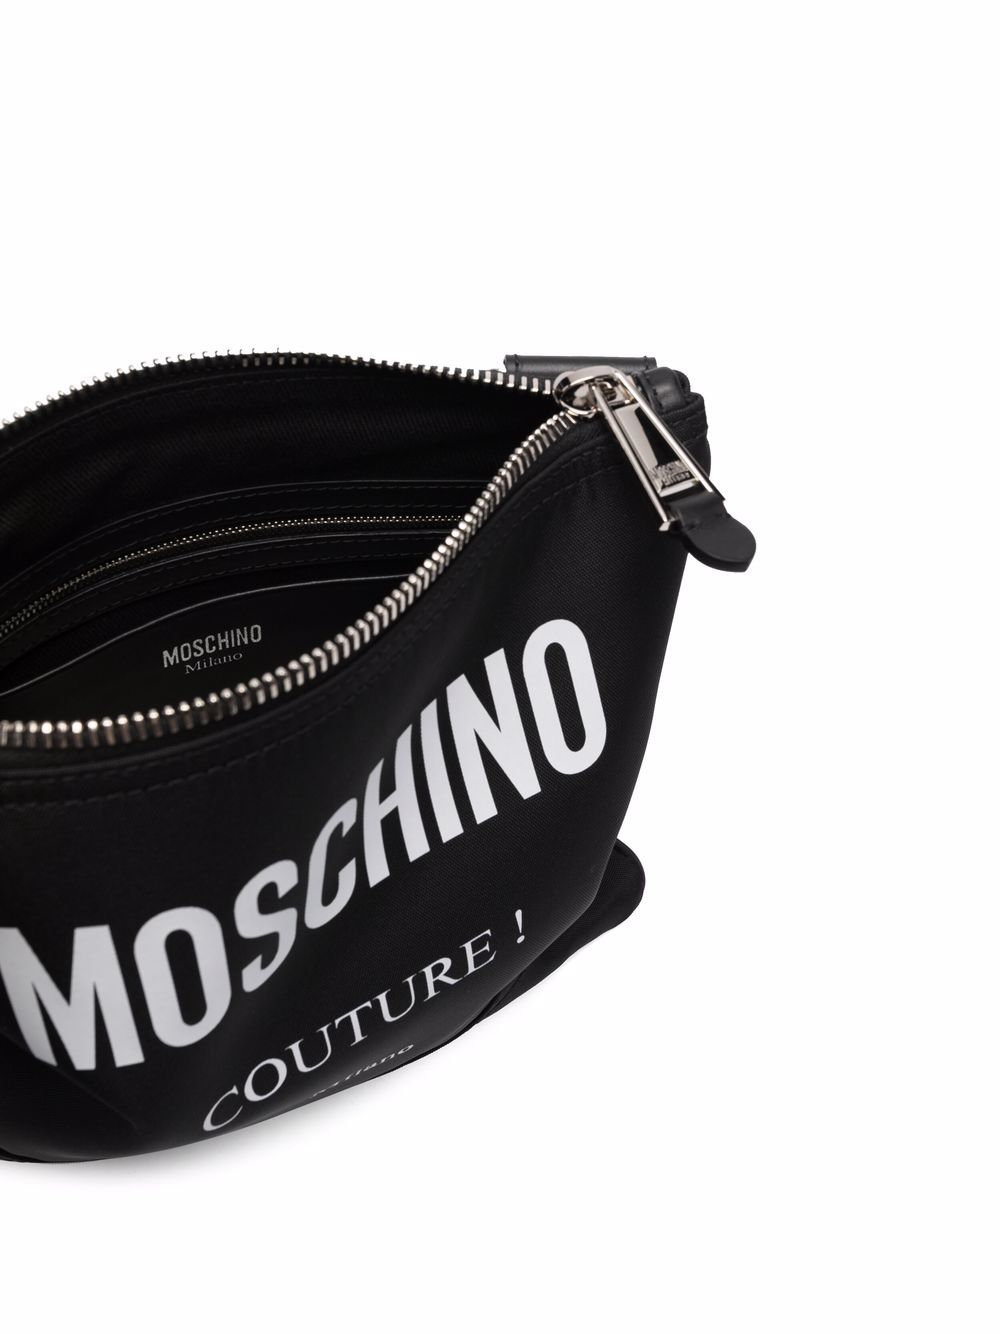 фото Moschino сумка-мессенджер с логотипом